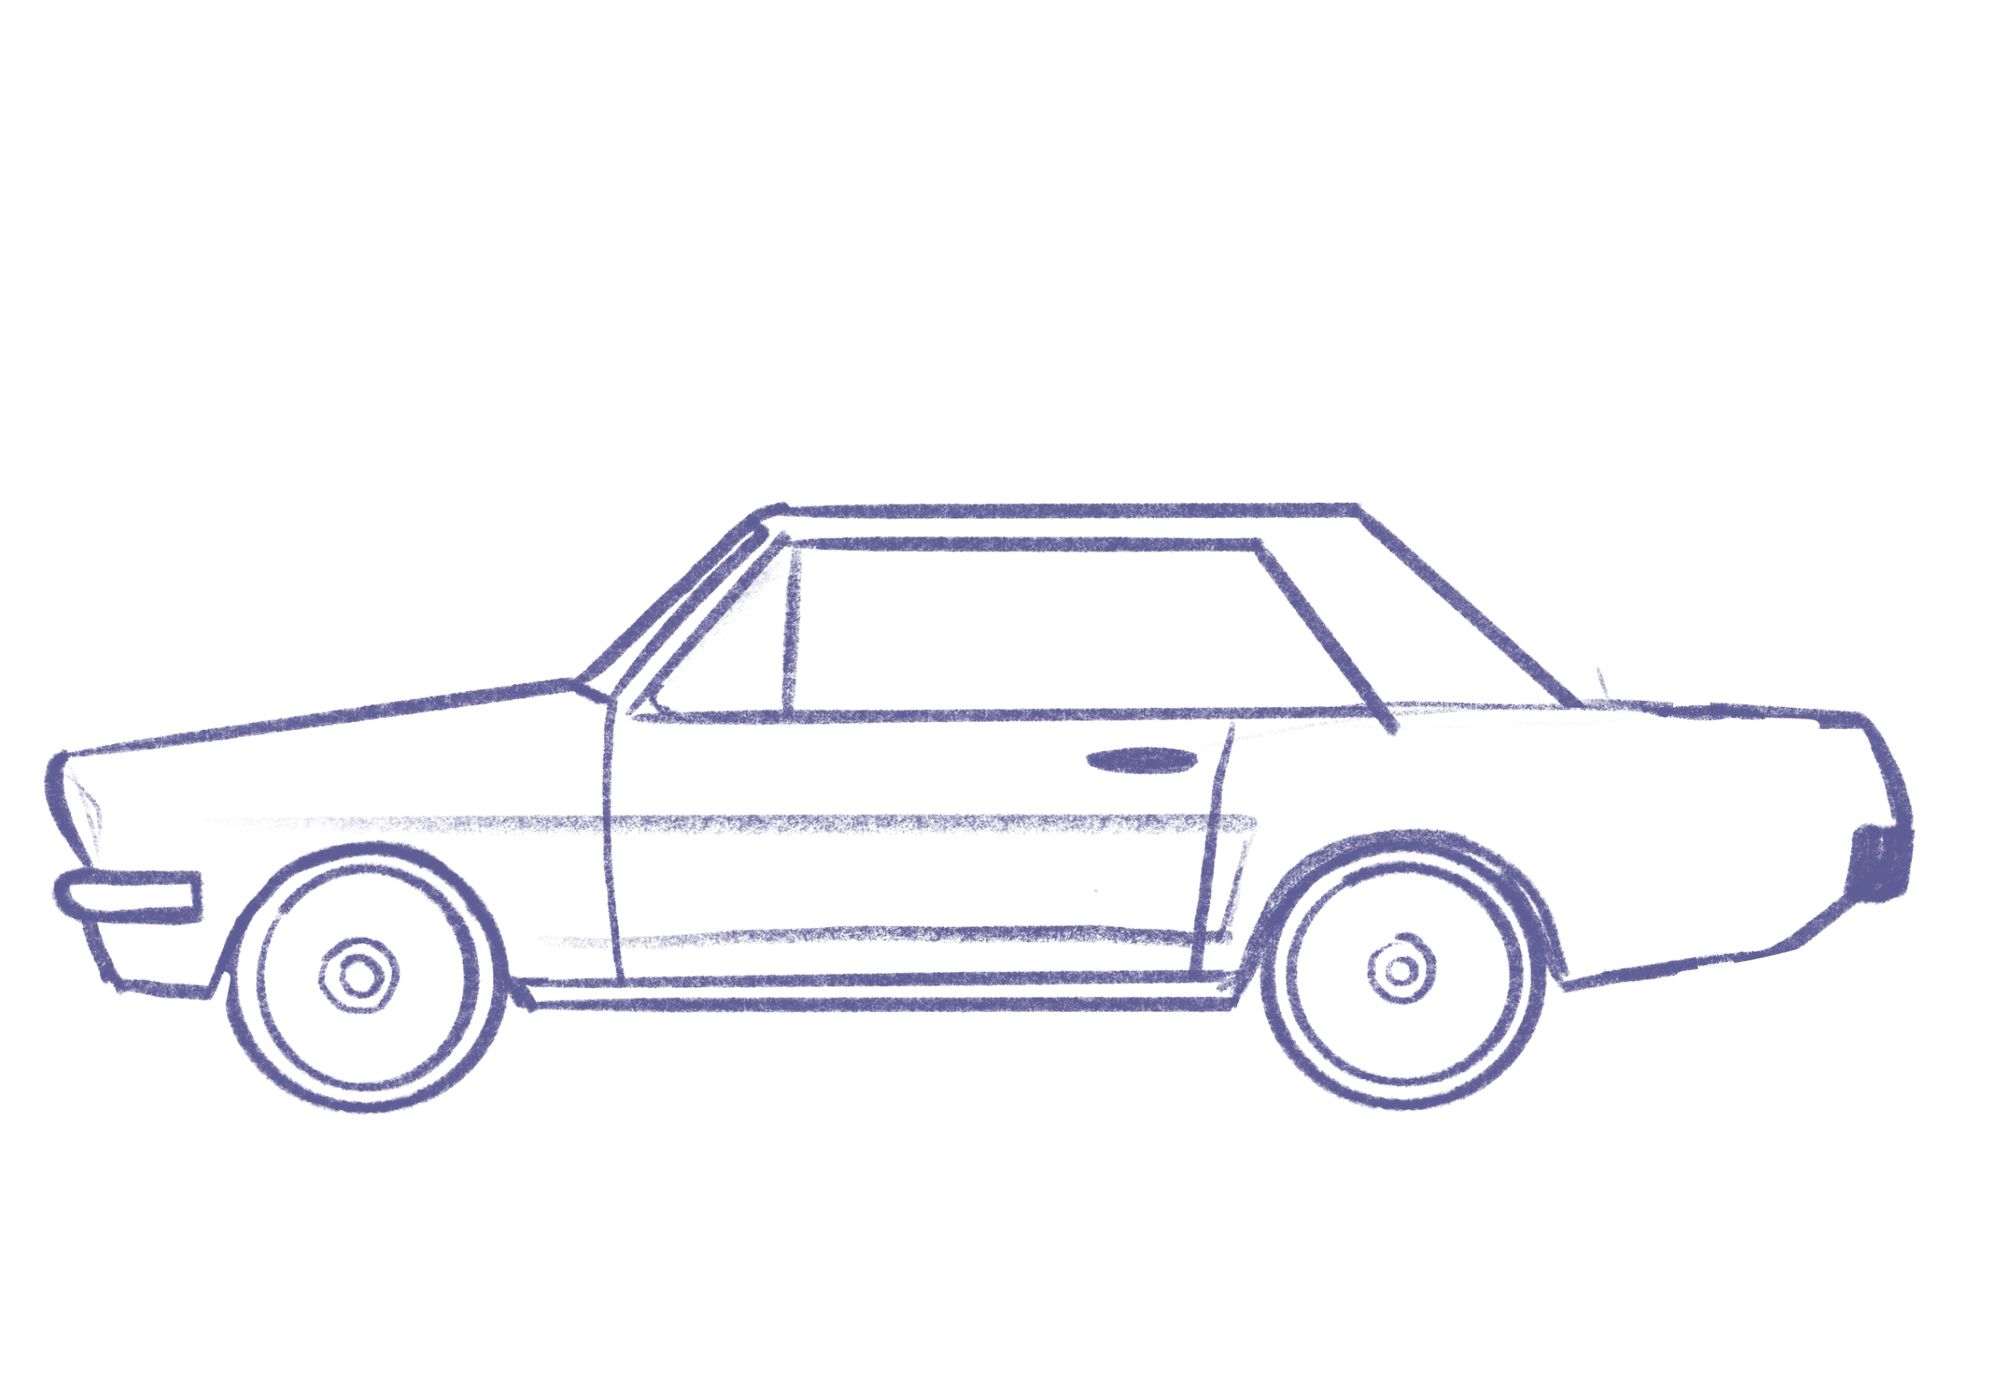 Digital drawing of a car